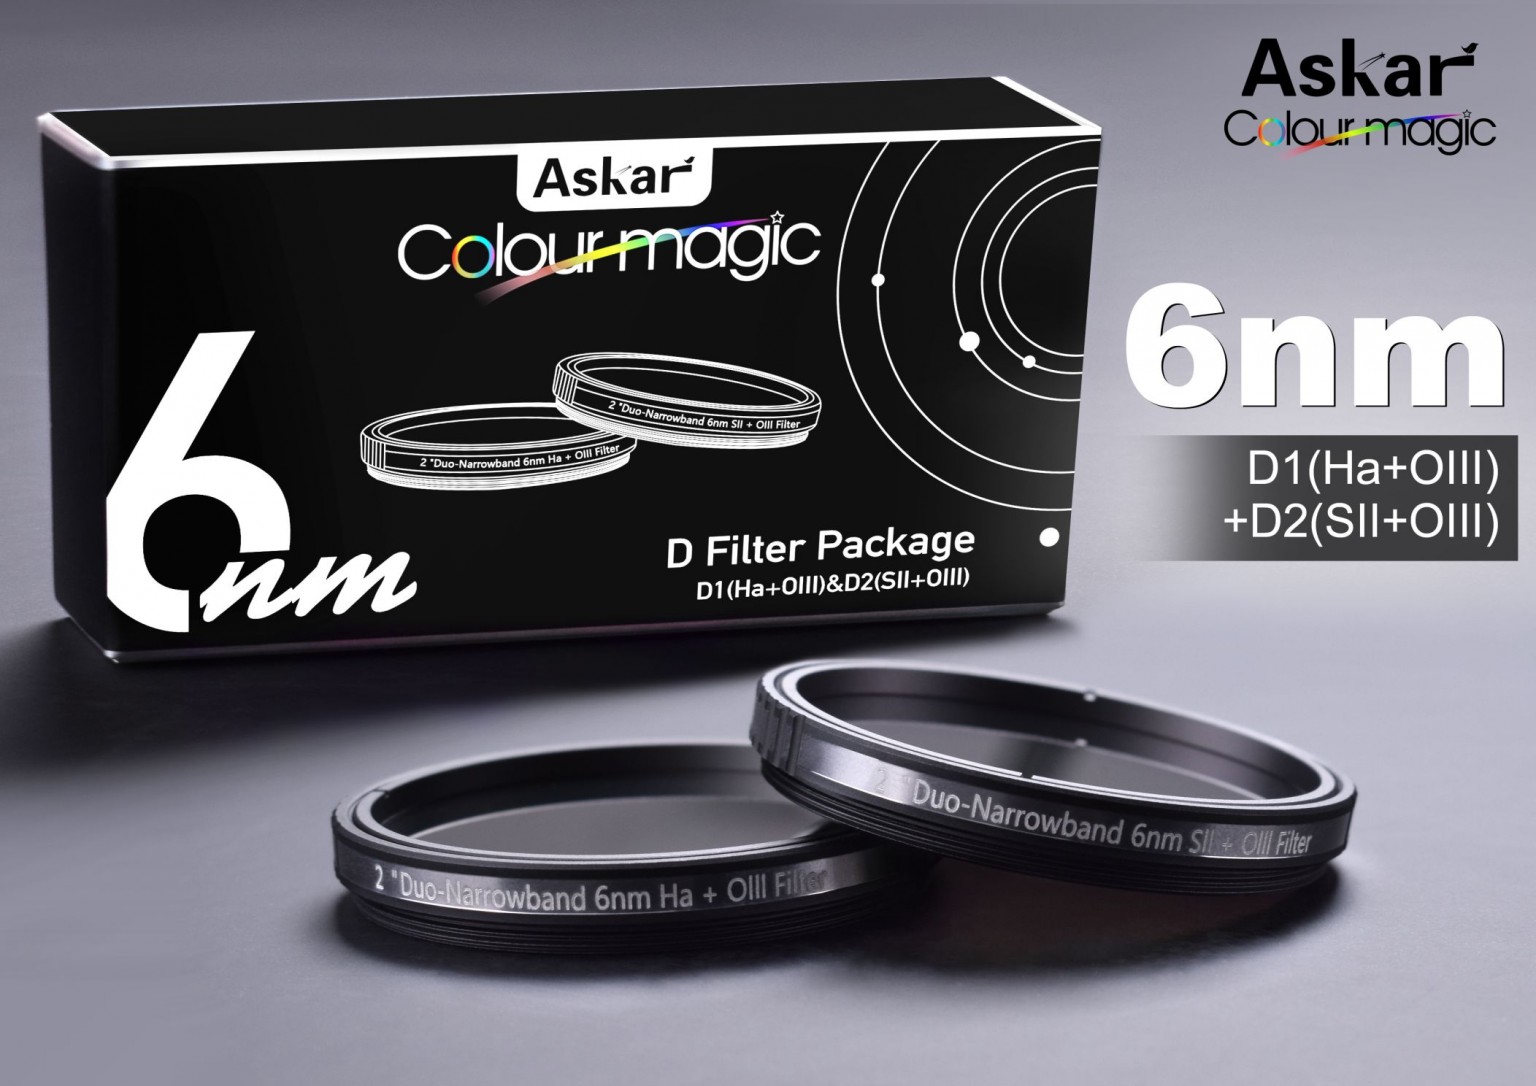 Askar Colour Magic 6nm Duo-narrowband Filter